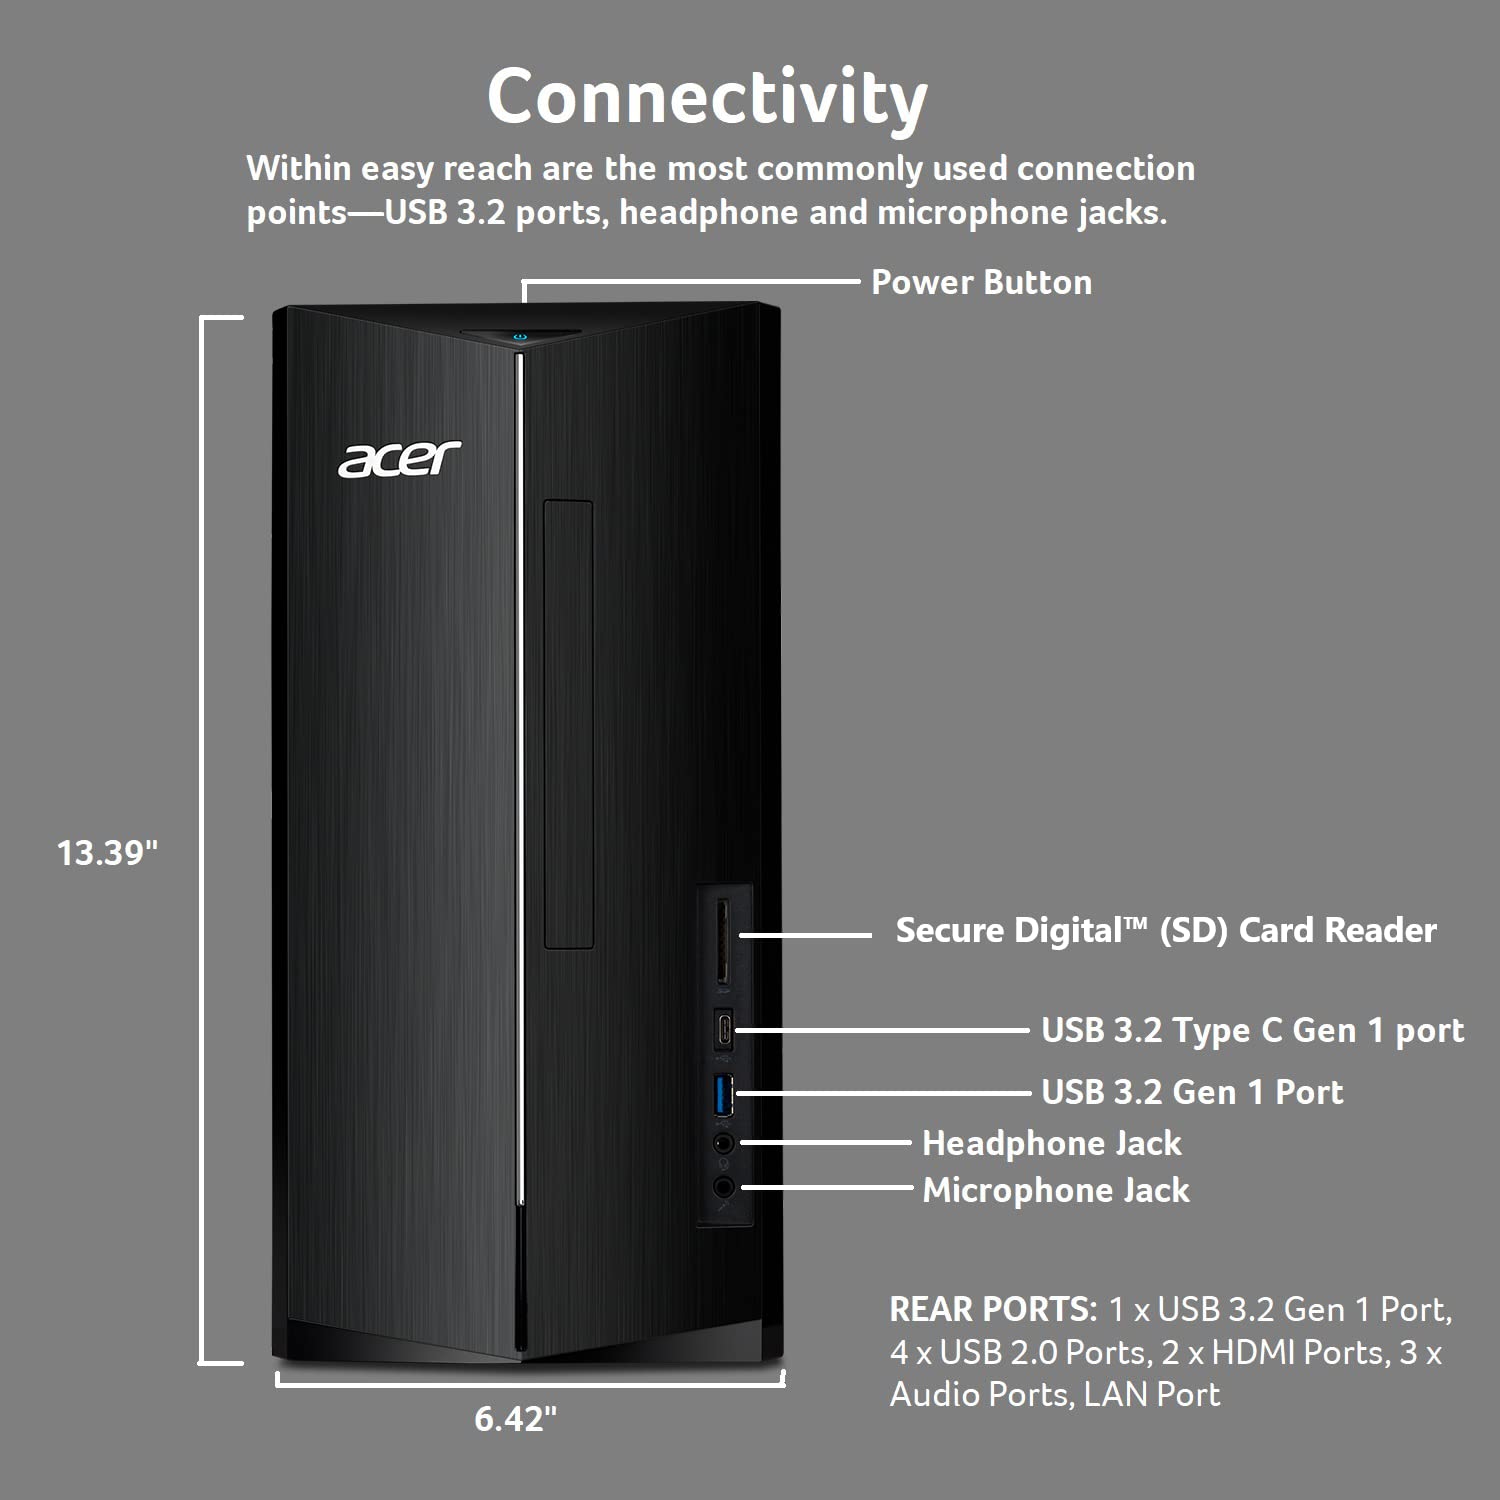 Acer Aspire TC-1780-UR11 Desktop | 13th Gen Intel Core i5-13400 10-Core Processor | 16GB 3200MHz DDR4 | 512GB M.2 2280 PCIe Gen 4 SSD | SD Card Reader | Intel Wi-Fi 6E AX211 | Windows 11 Pro,Black